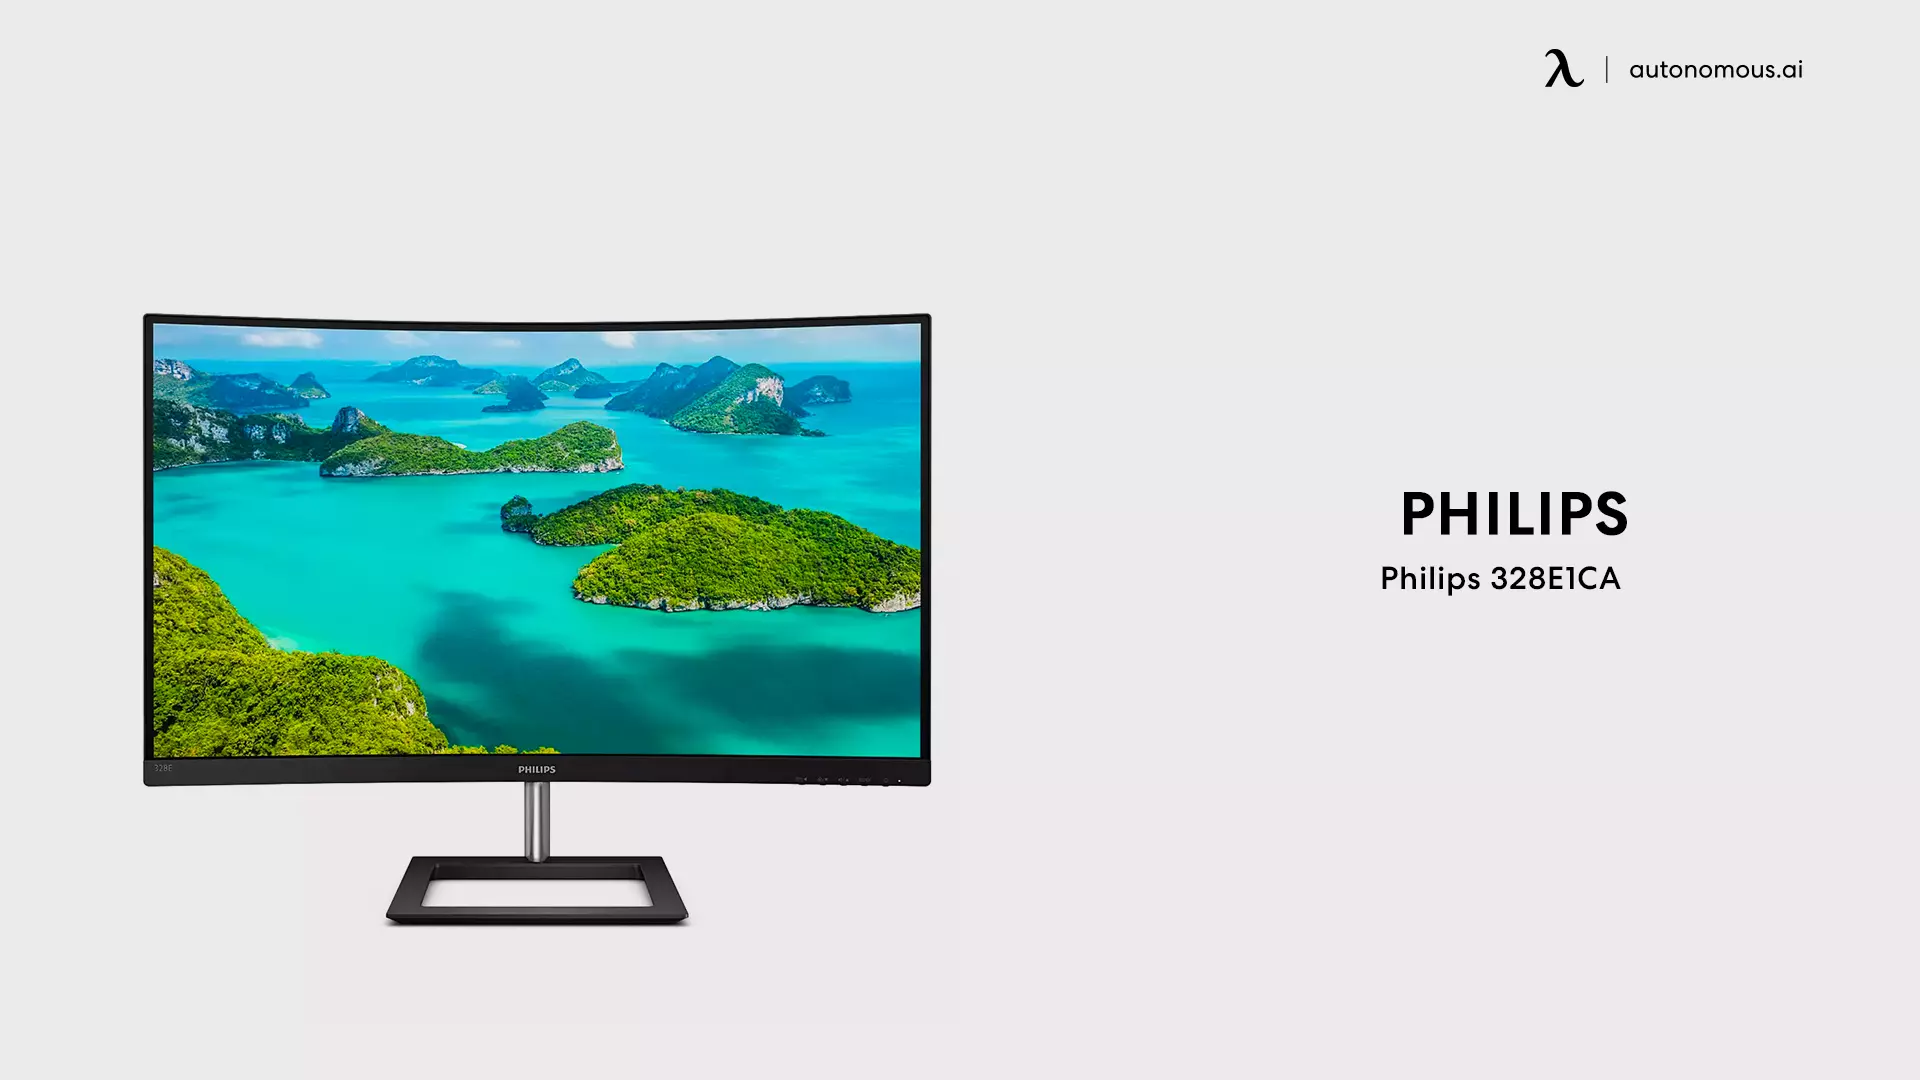 Philips 328E1CA 4k g sync monitor